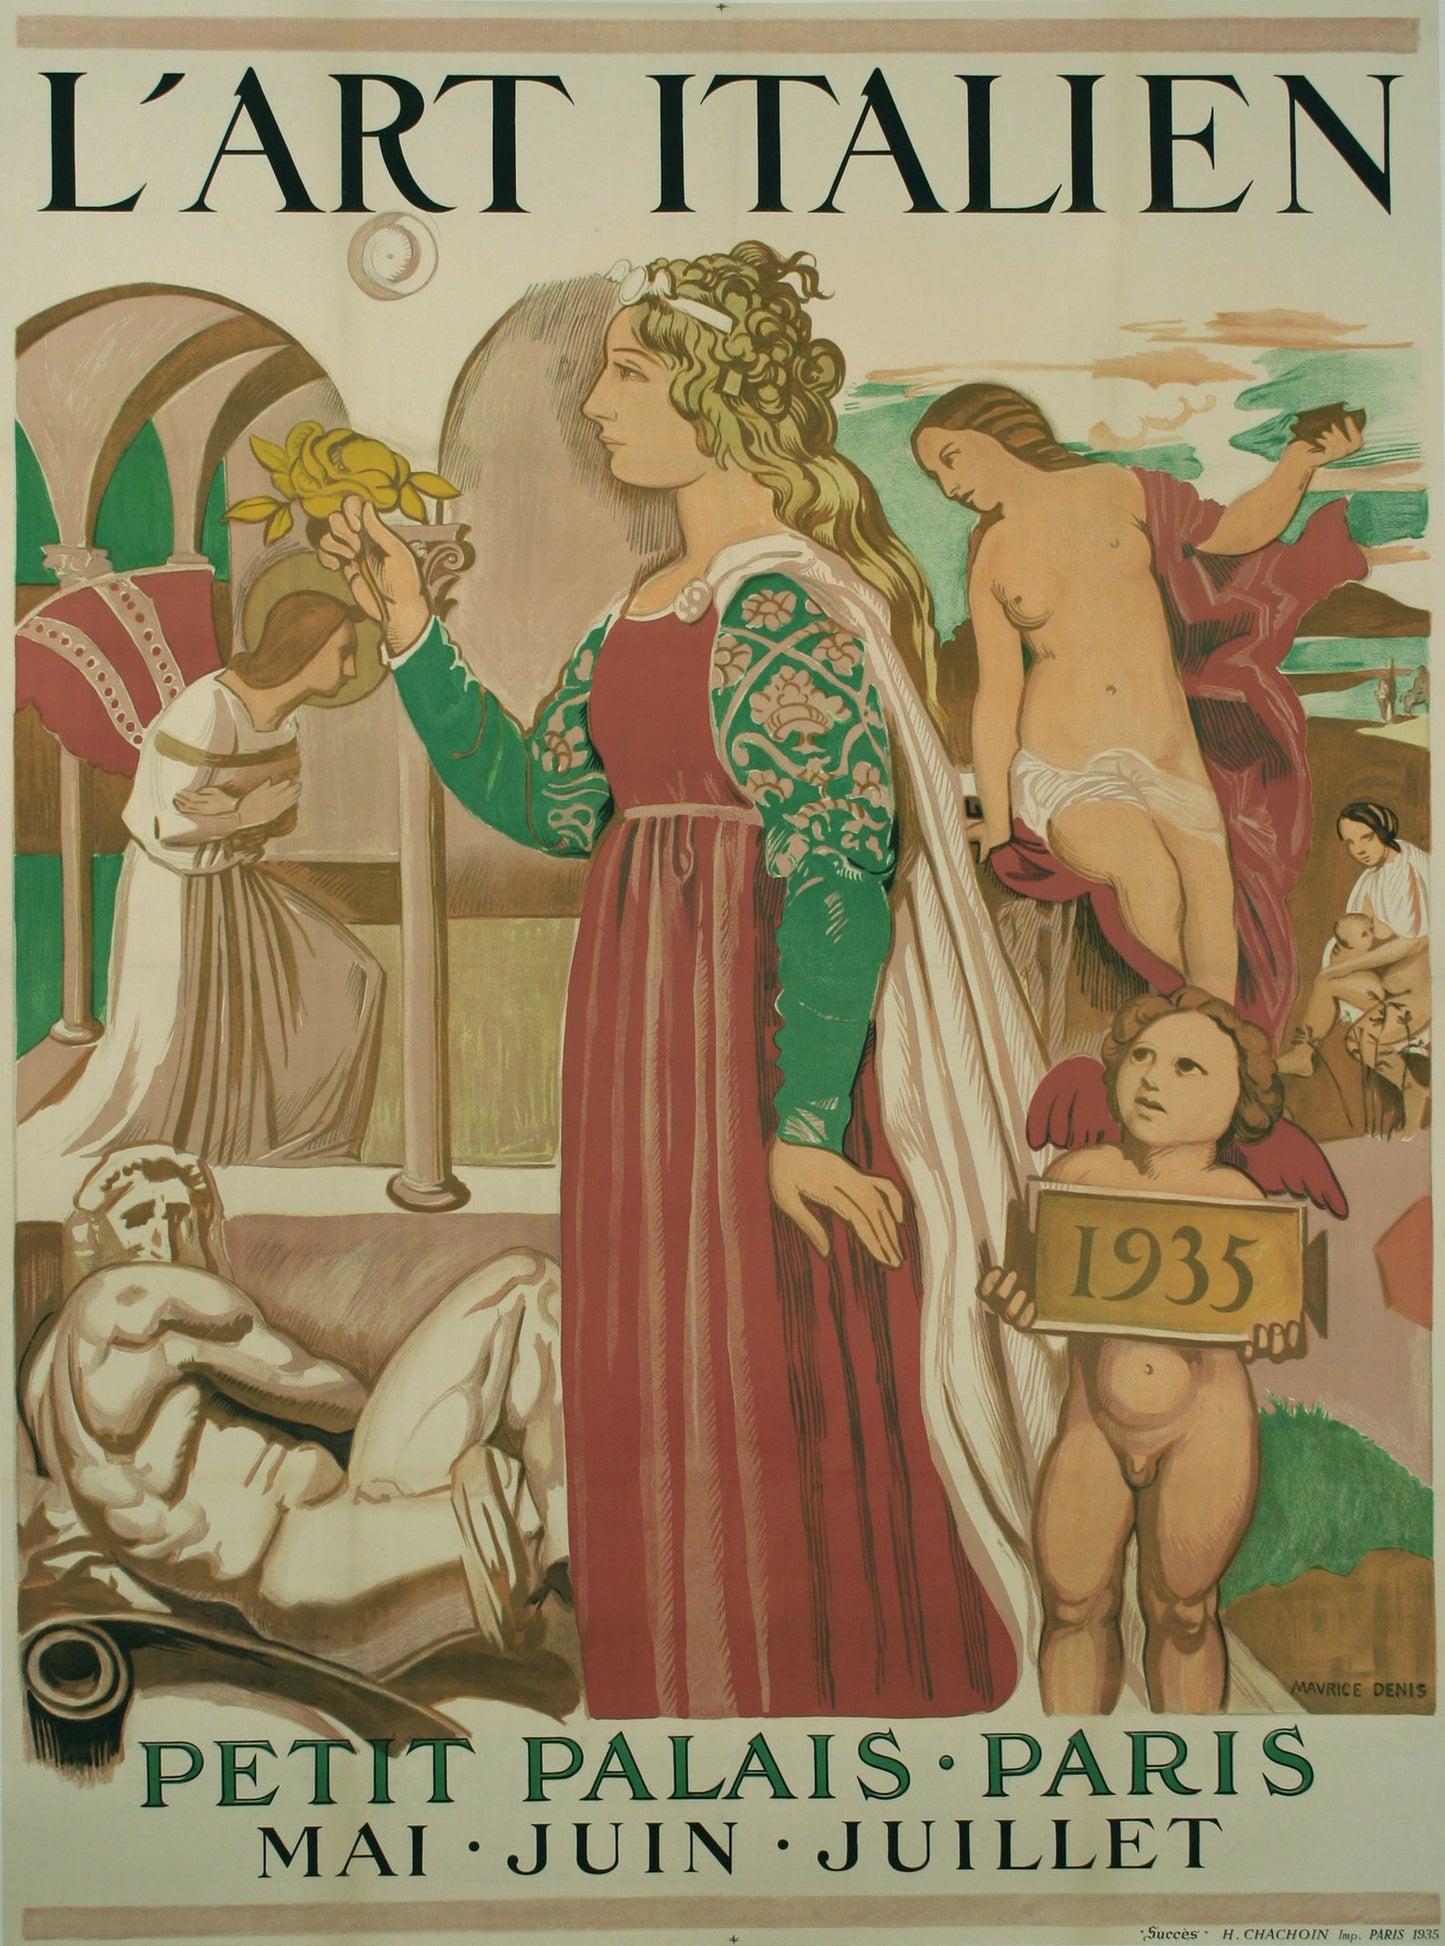 <b>MAURICE DENIS</b><br> L'ART ITALIEN, CIRCA 1935</br>